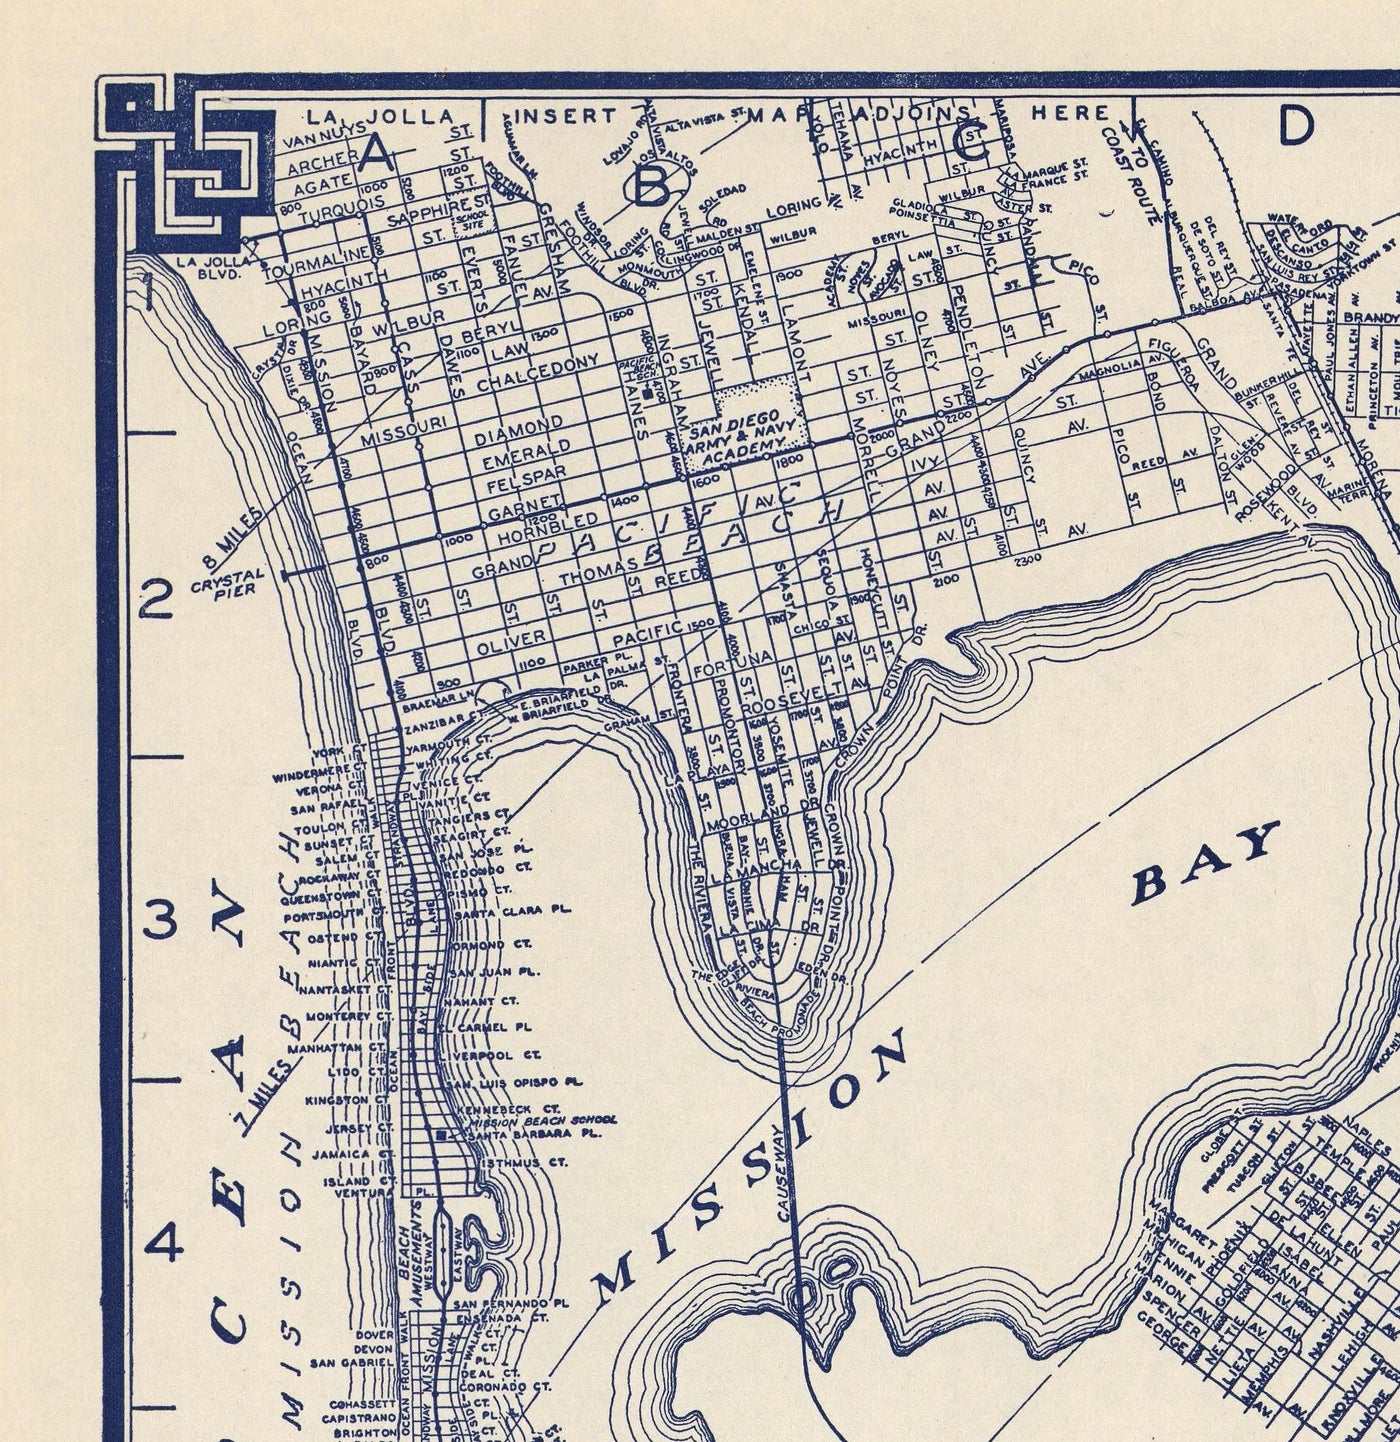 Old Map of San Diego, 1938 by Thomas Bros - National City, La Jolla, La Mesa, Downtown, Balboa Park & Zoo, North Island